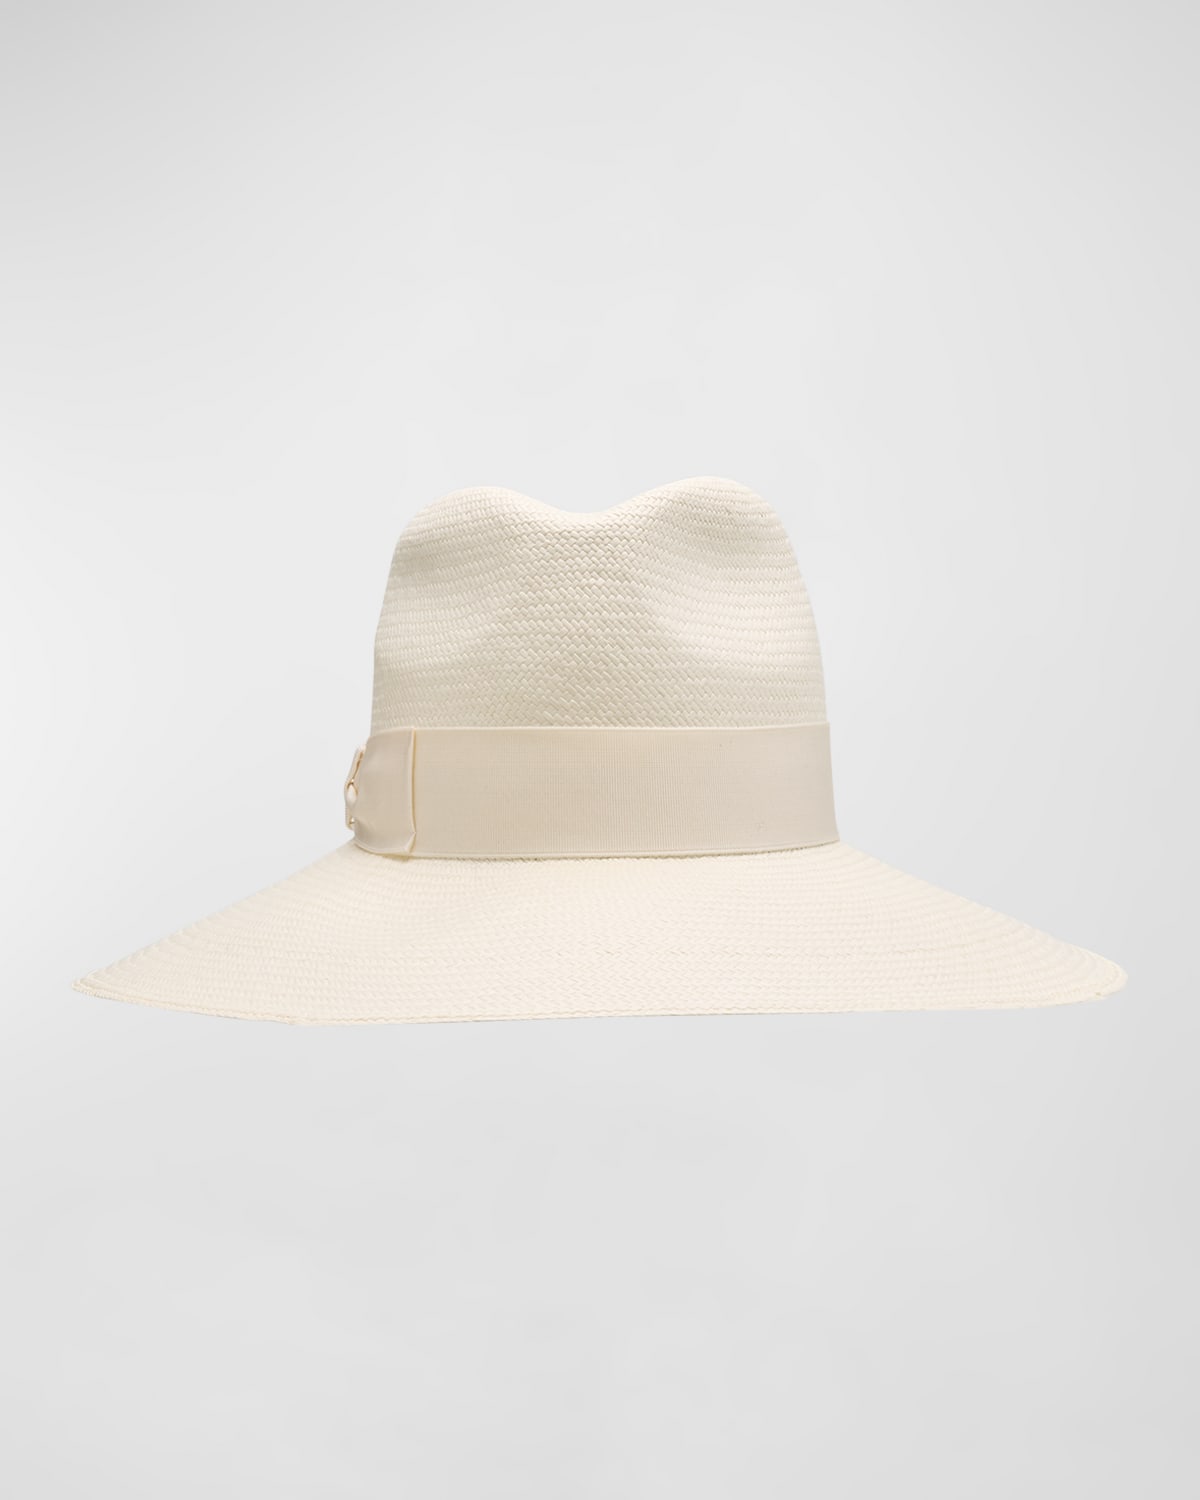 Sophie White Straw Large Brim Hat